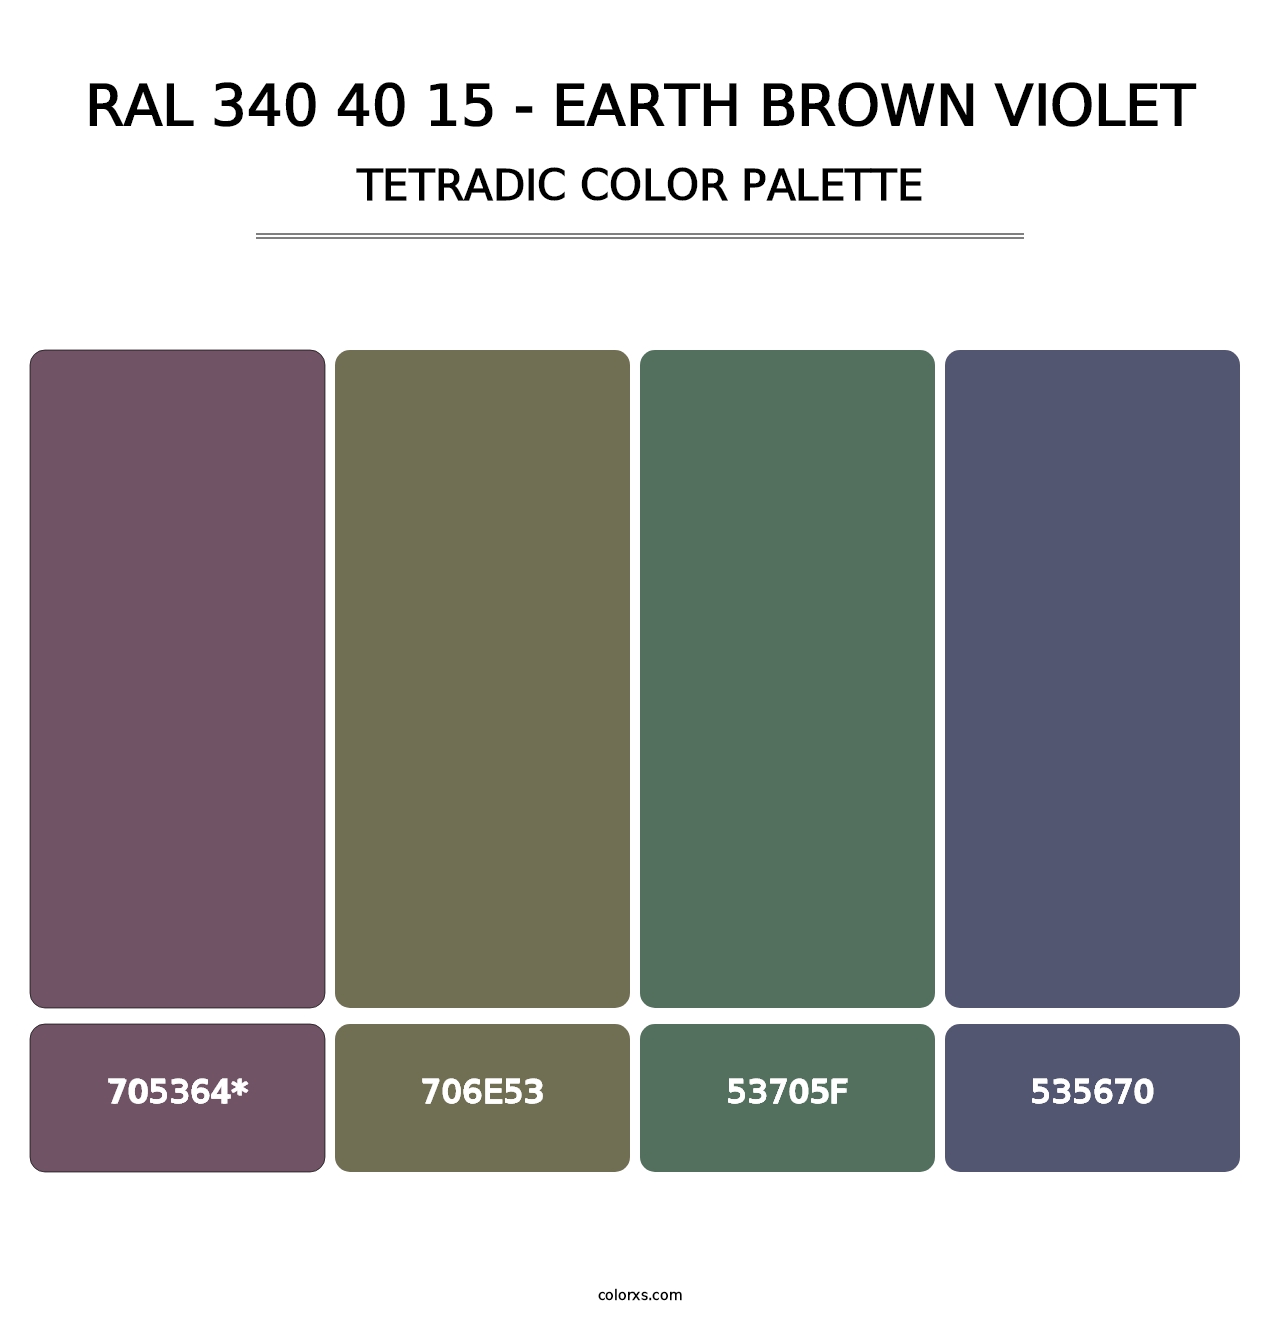 RAL 340 40 15 - Earth Brown Violet - Tetradic Color Palette